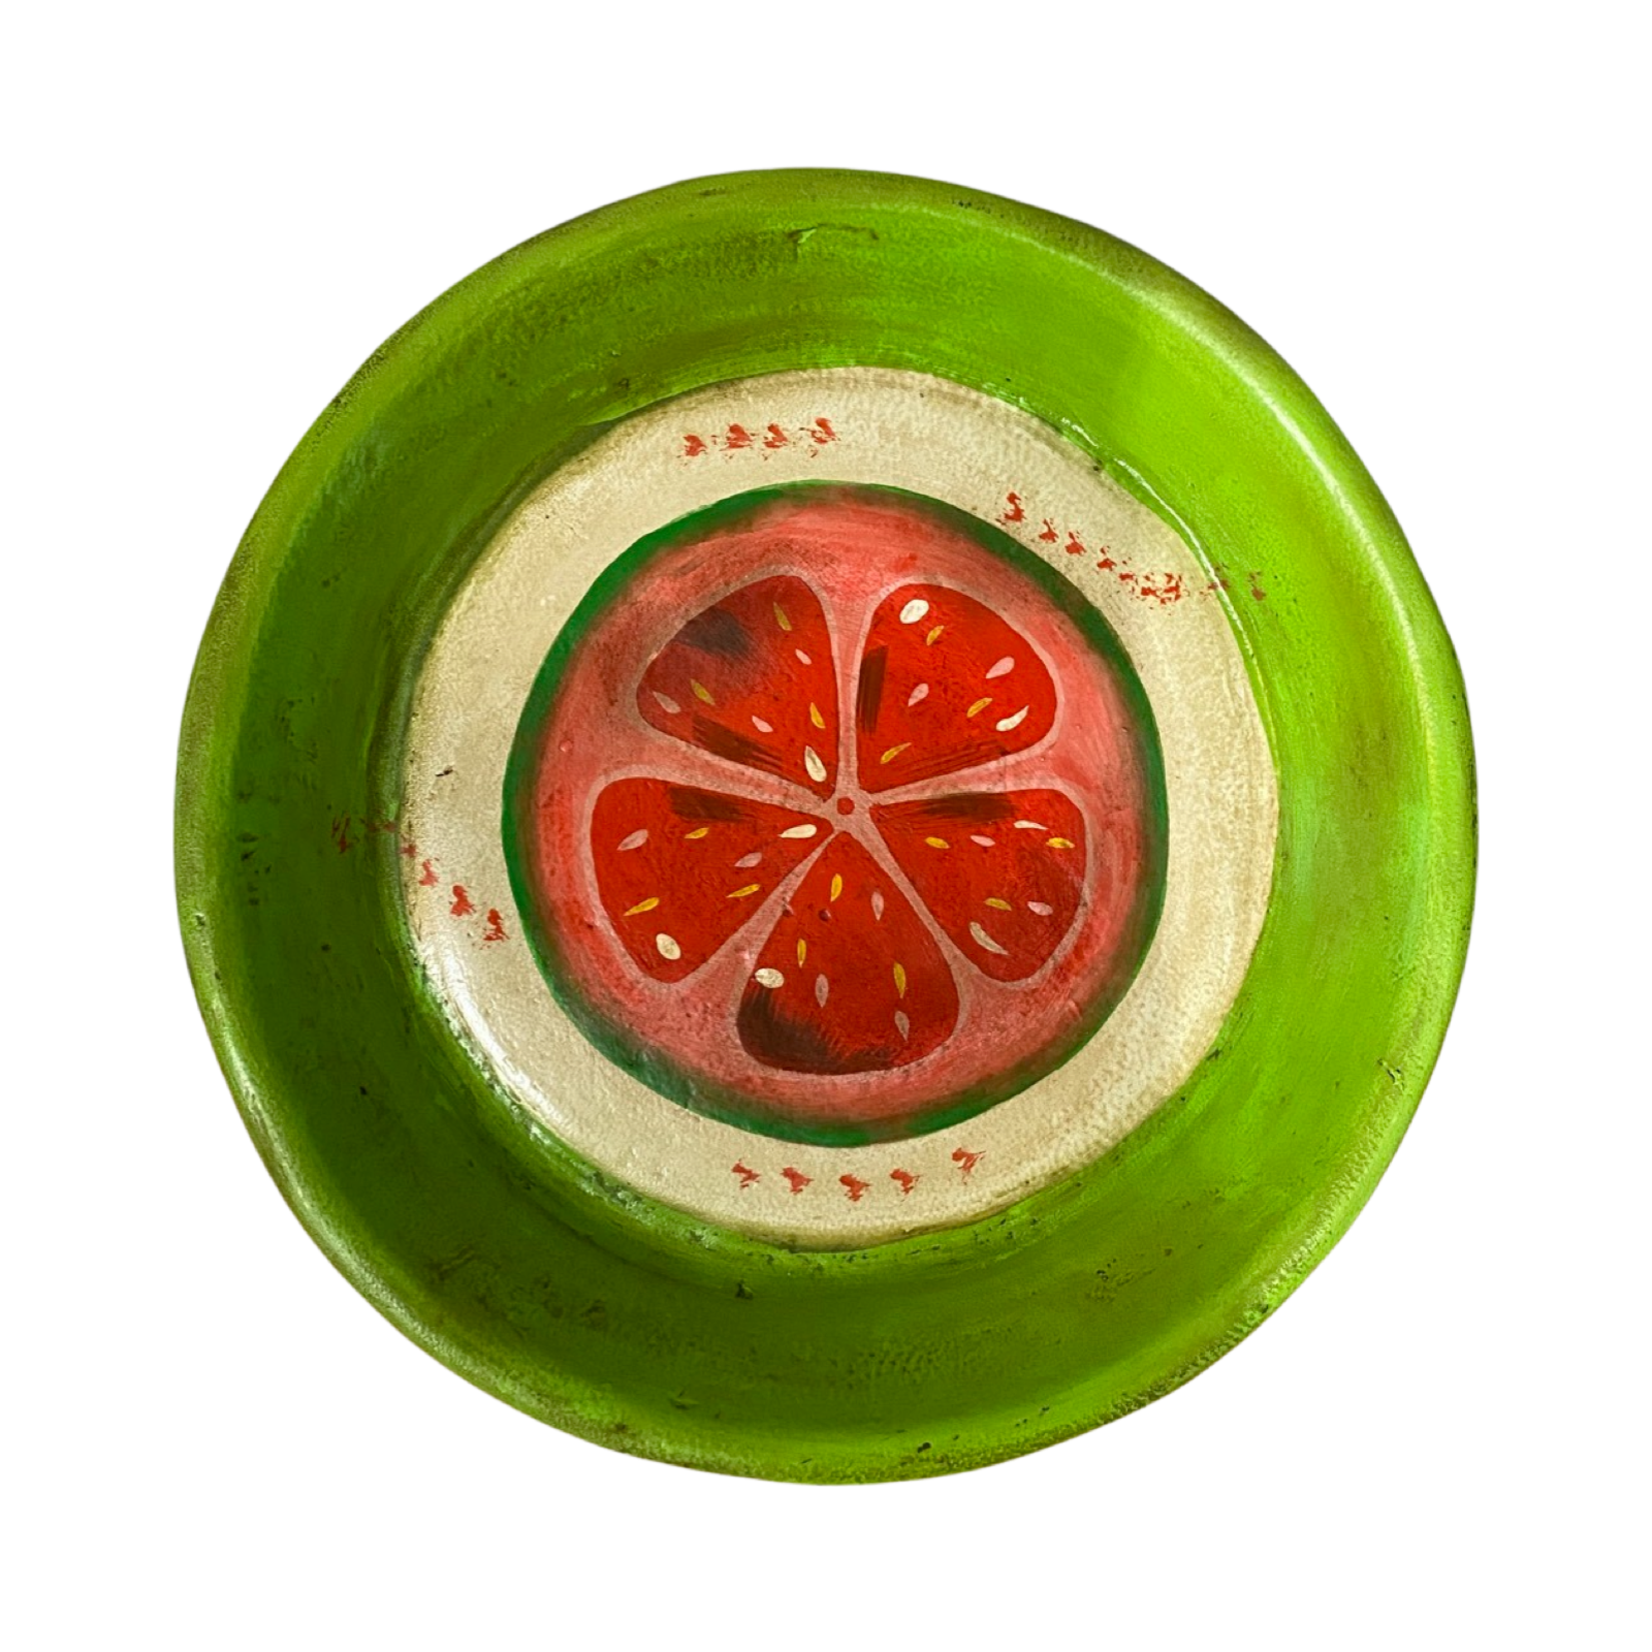 Purpers Choice Groene tray met meloen 37 cm